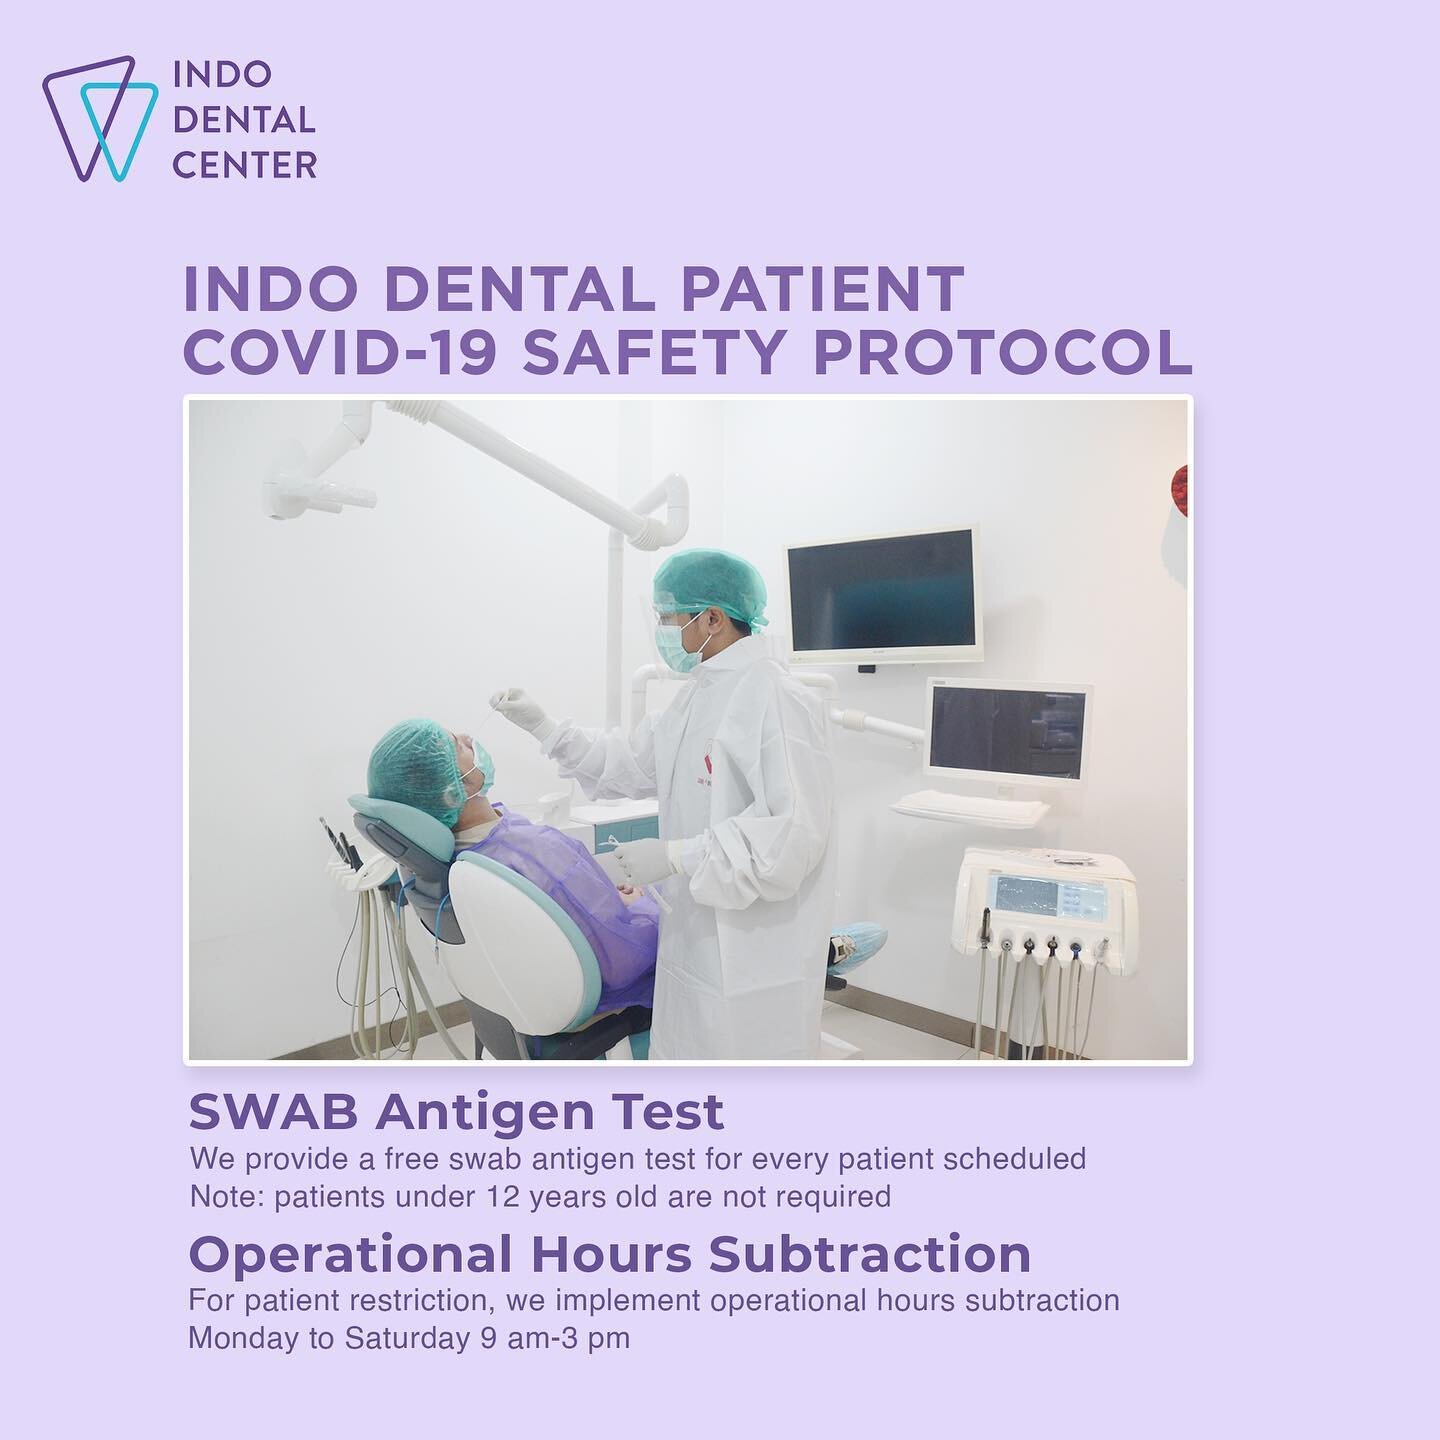 Drg. Leonard C. Nelwan, Sp. Pros, FISID, FITI-Indo Dental Center